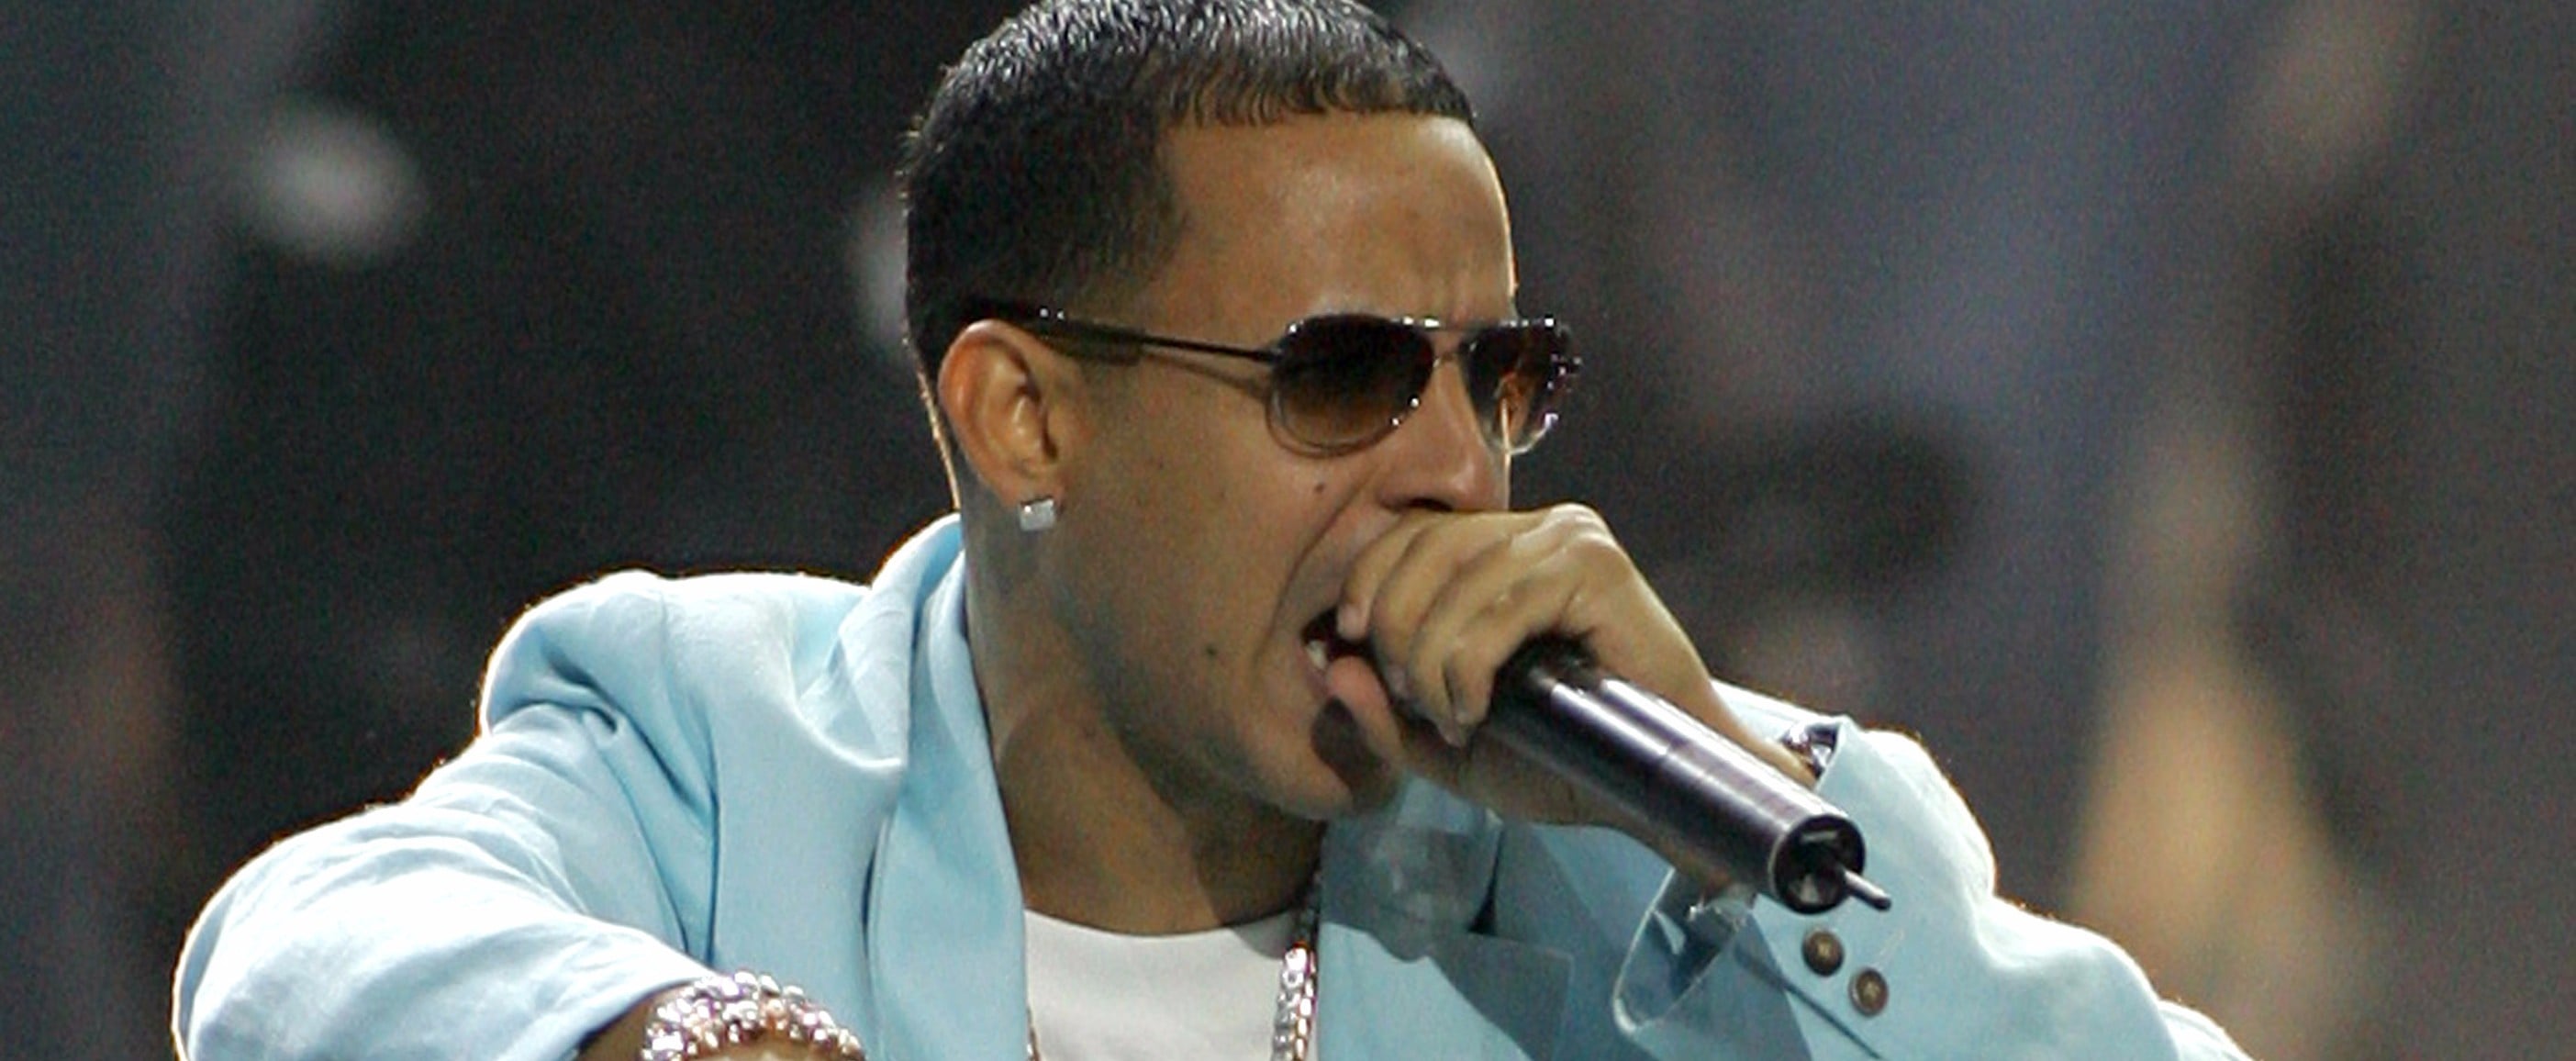 Daddy Yankee - Gasolina (Lyrics) 